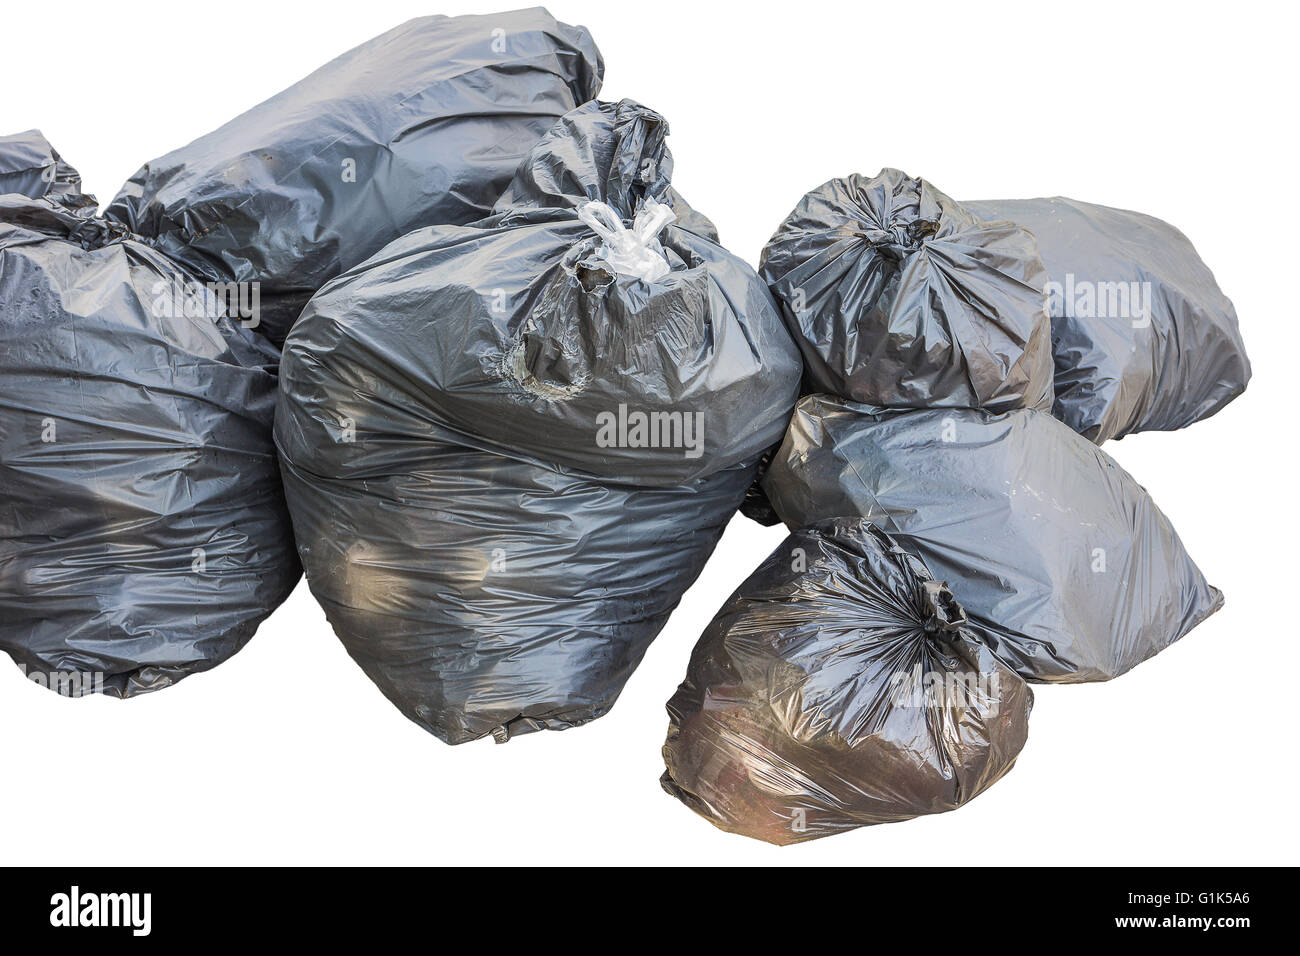 Three big blacks garbage bags full of trash Stock Photo - Alamy